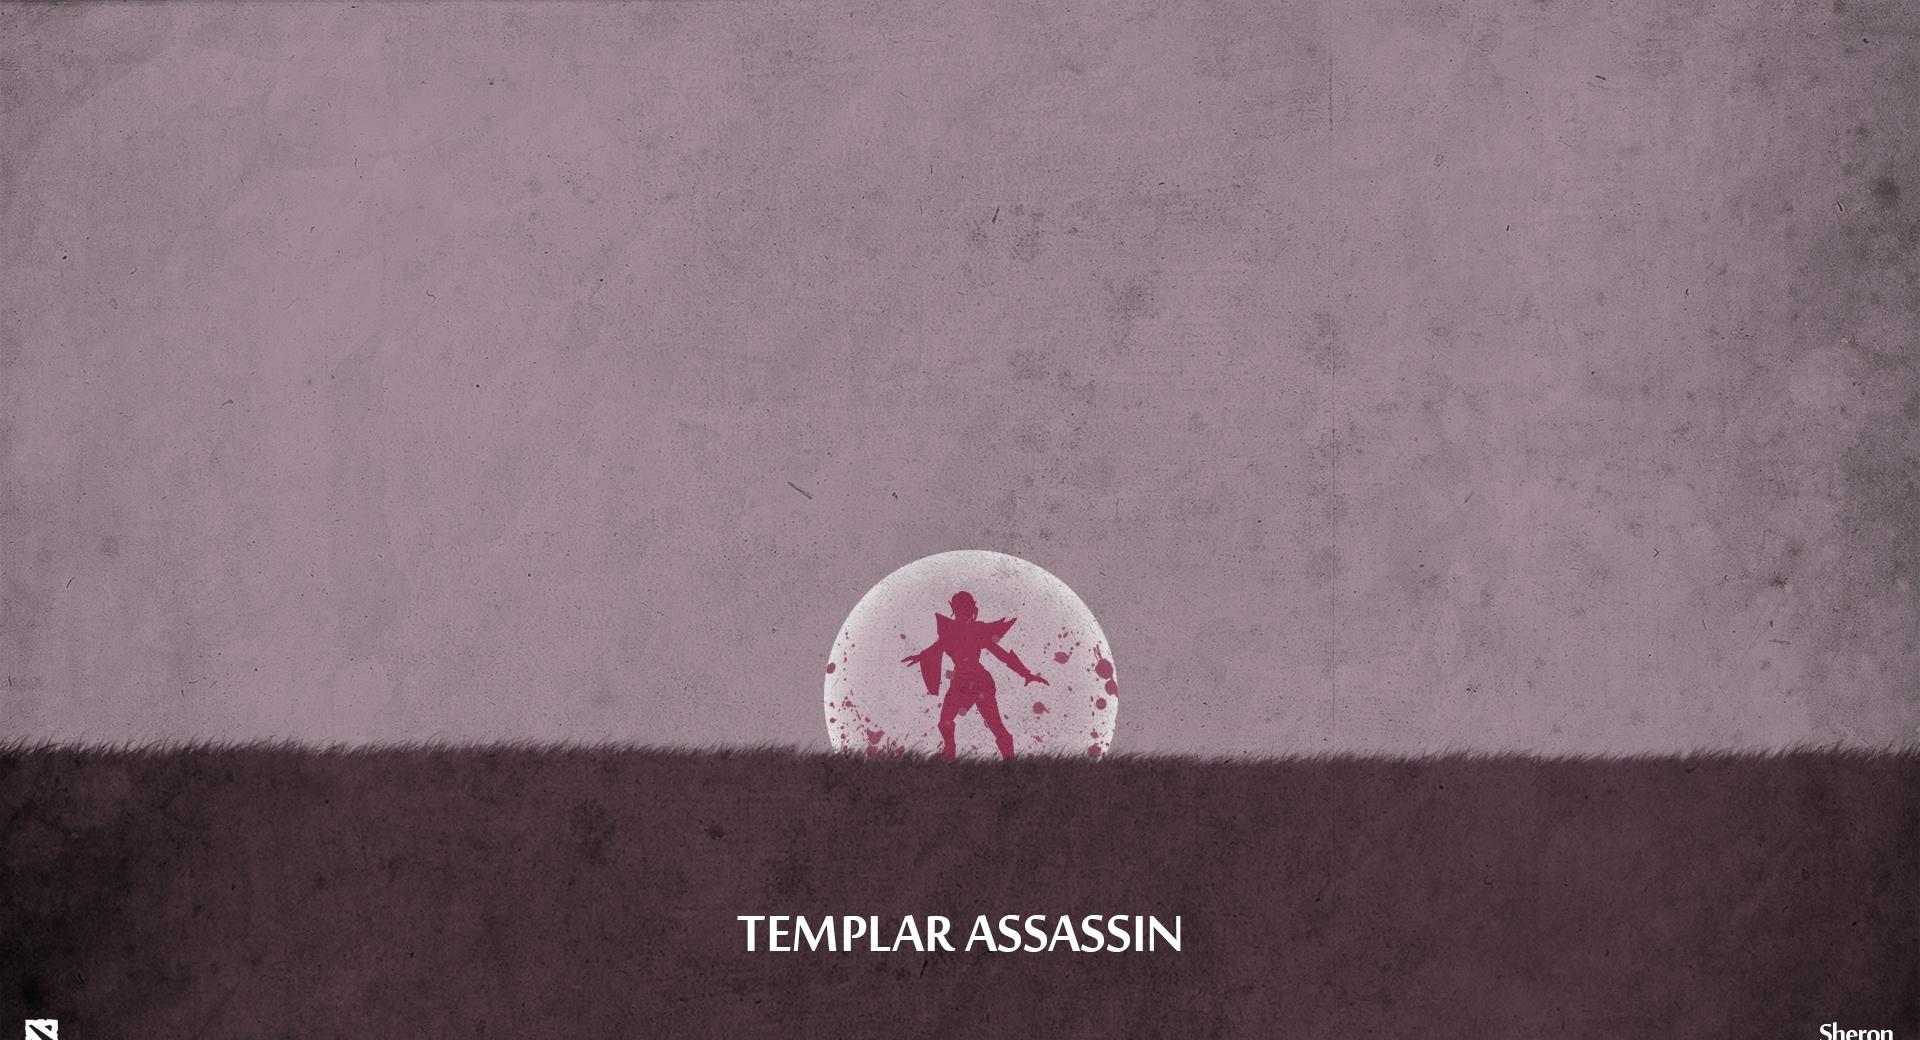 Templar Assassin - DotA 2 at 1024 x 768 size wallpapers HD quality